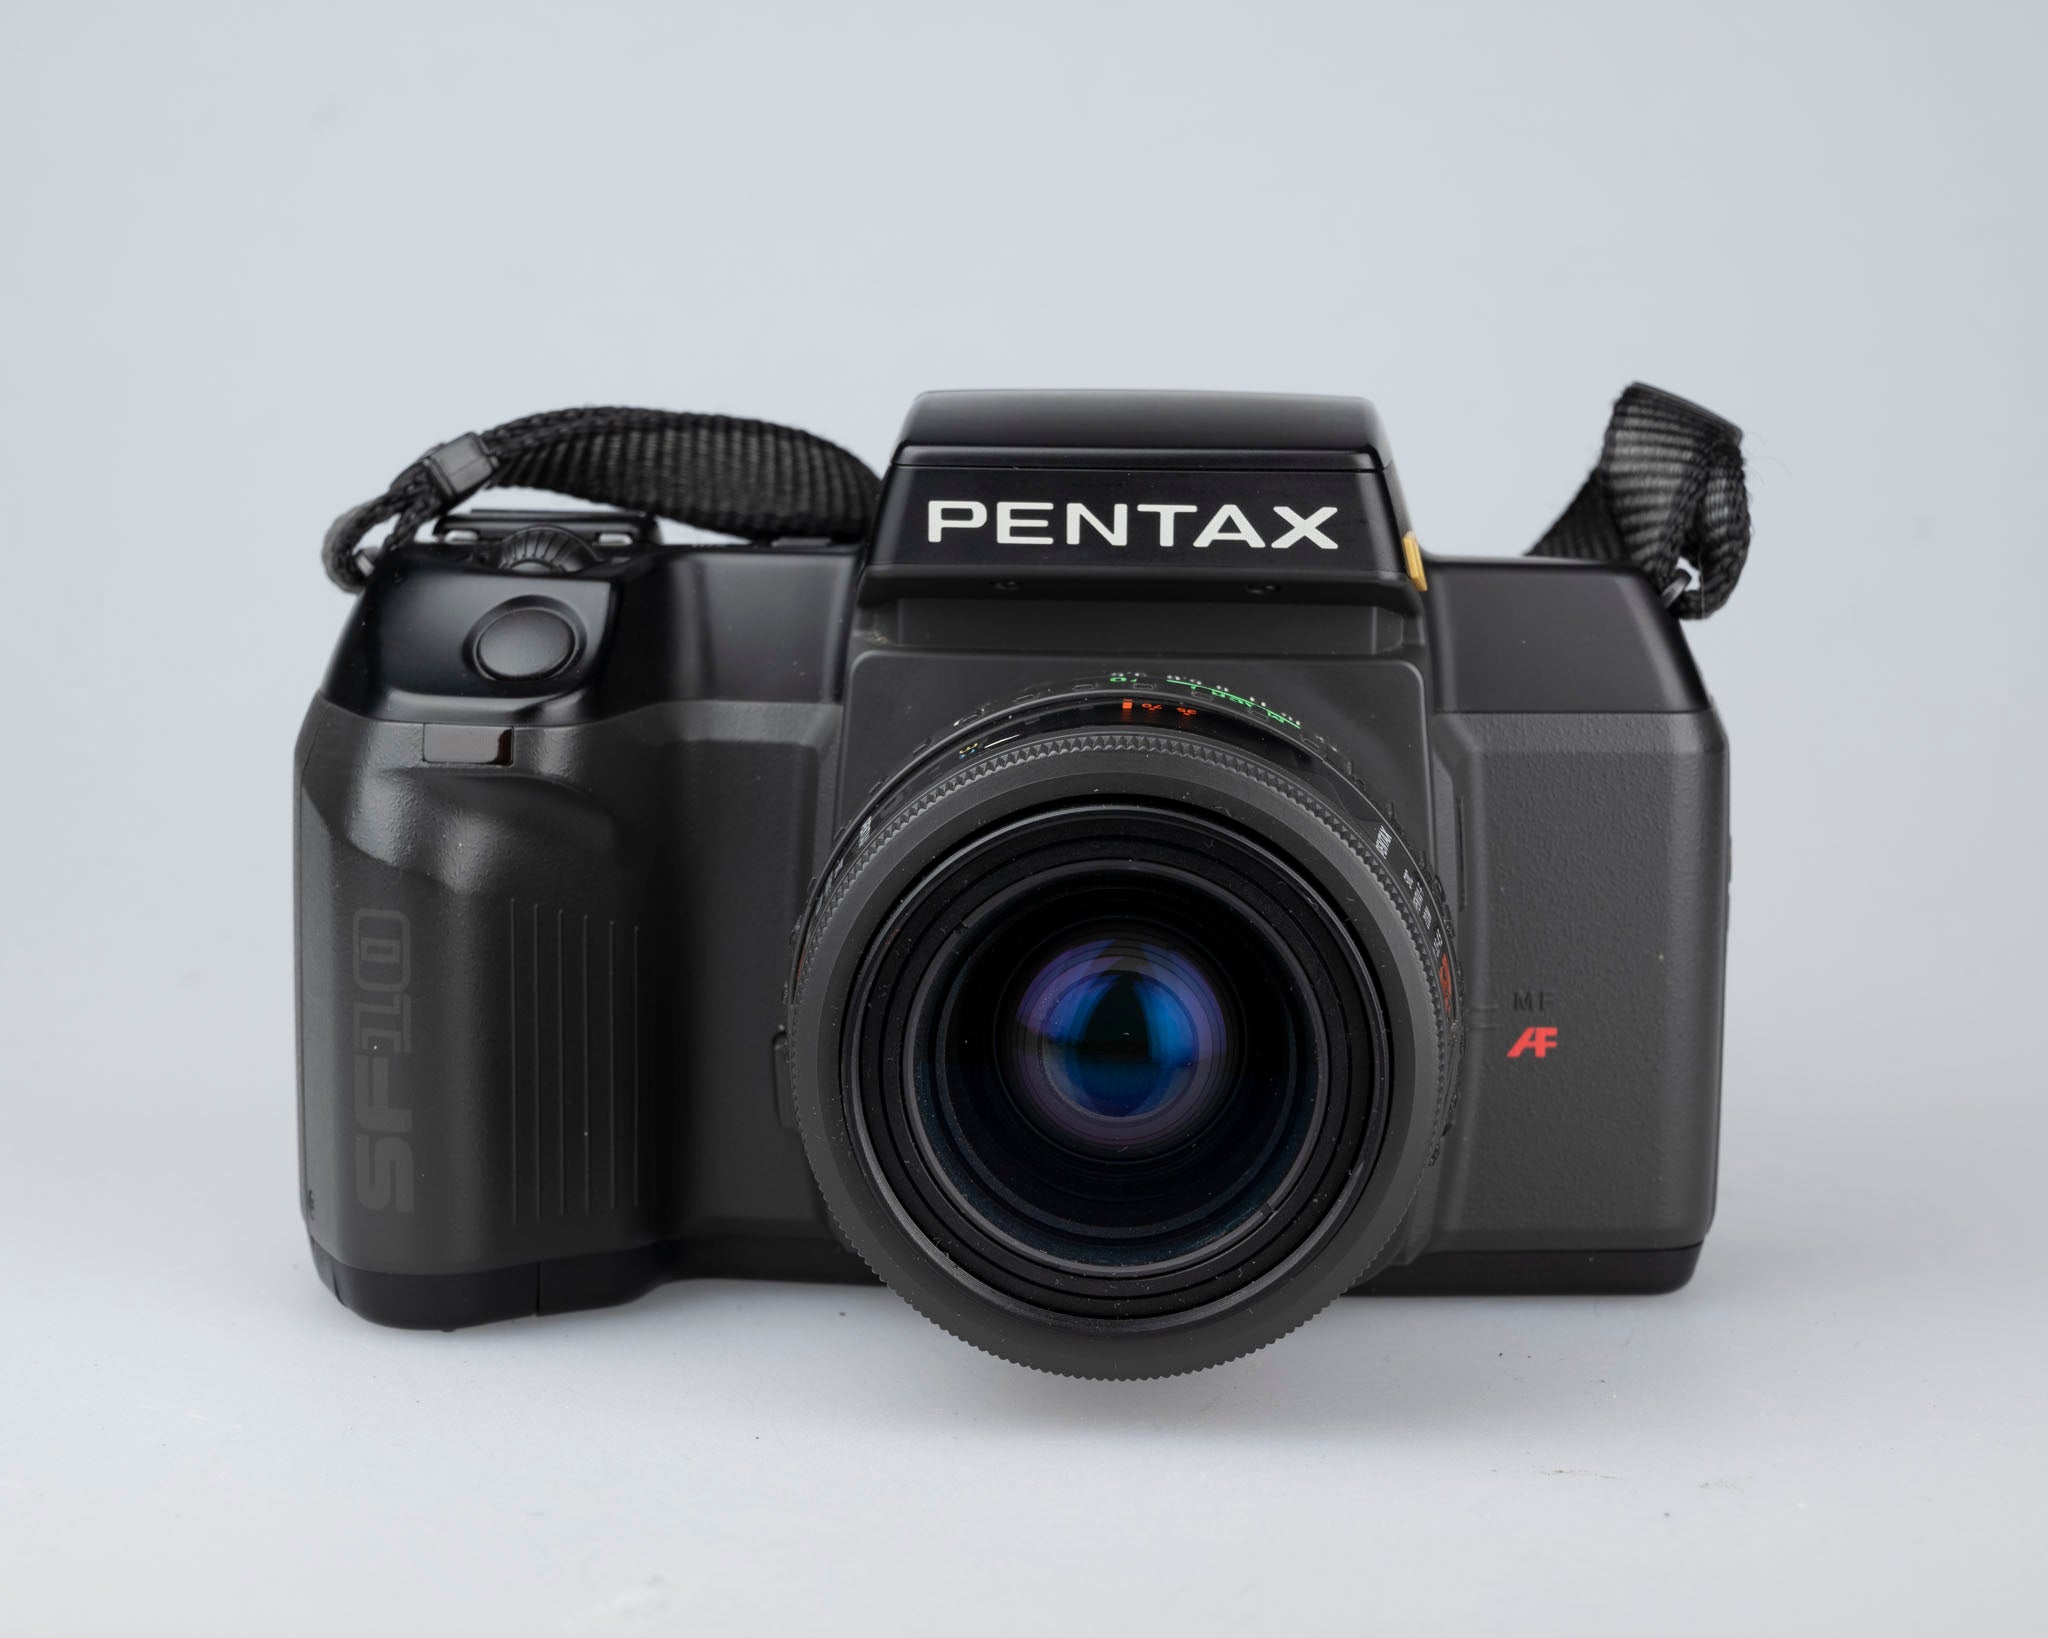 Pentax MZ-50 35mm SLR w/ SMC Pentax FA 80-320mm lens (serial